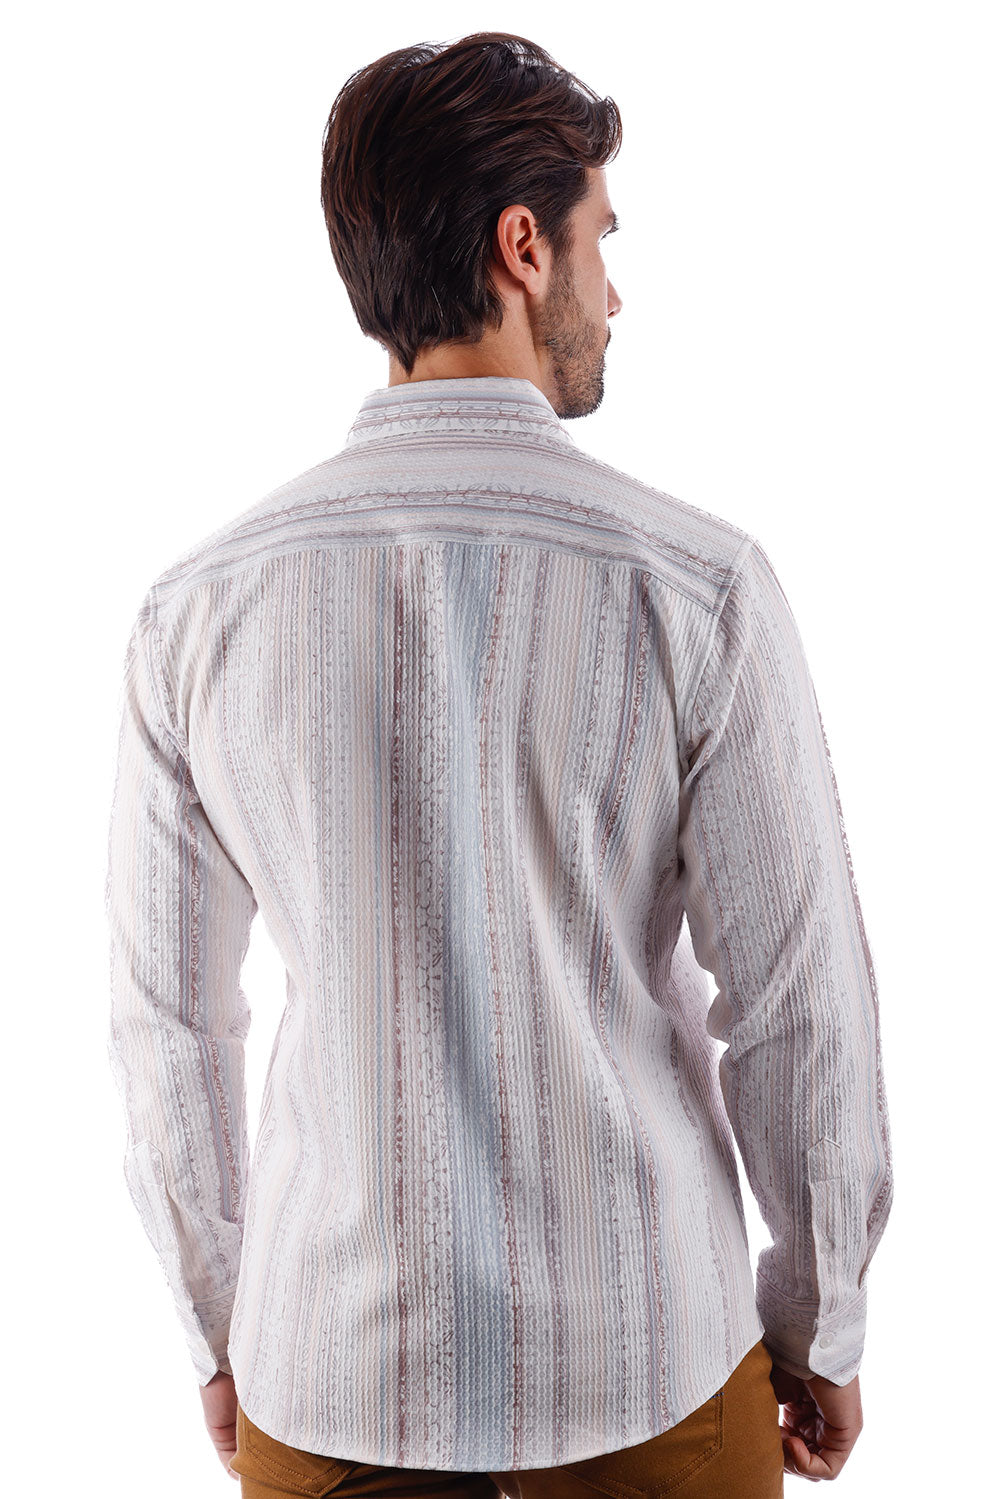 BARABAS Men's Geometric Print Button Down Long Sleeve Shirt 4B41 Wine